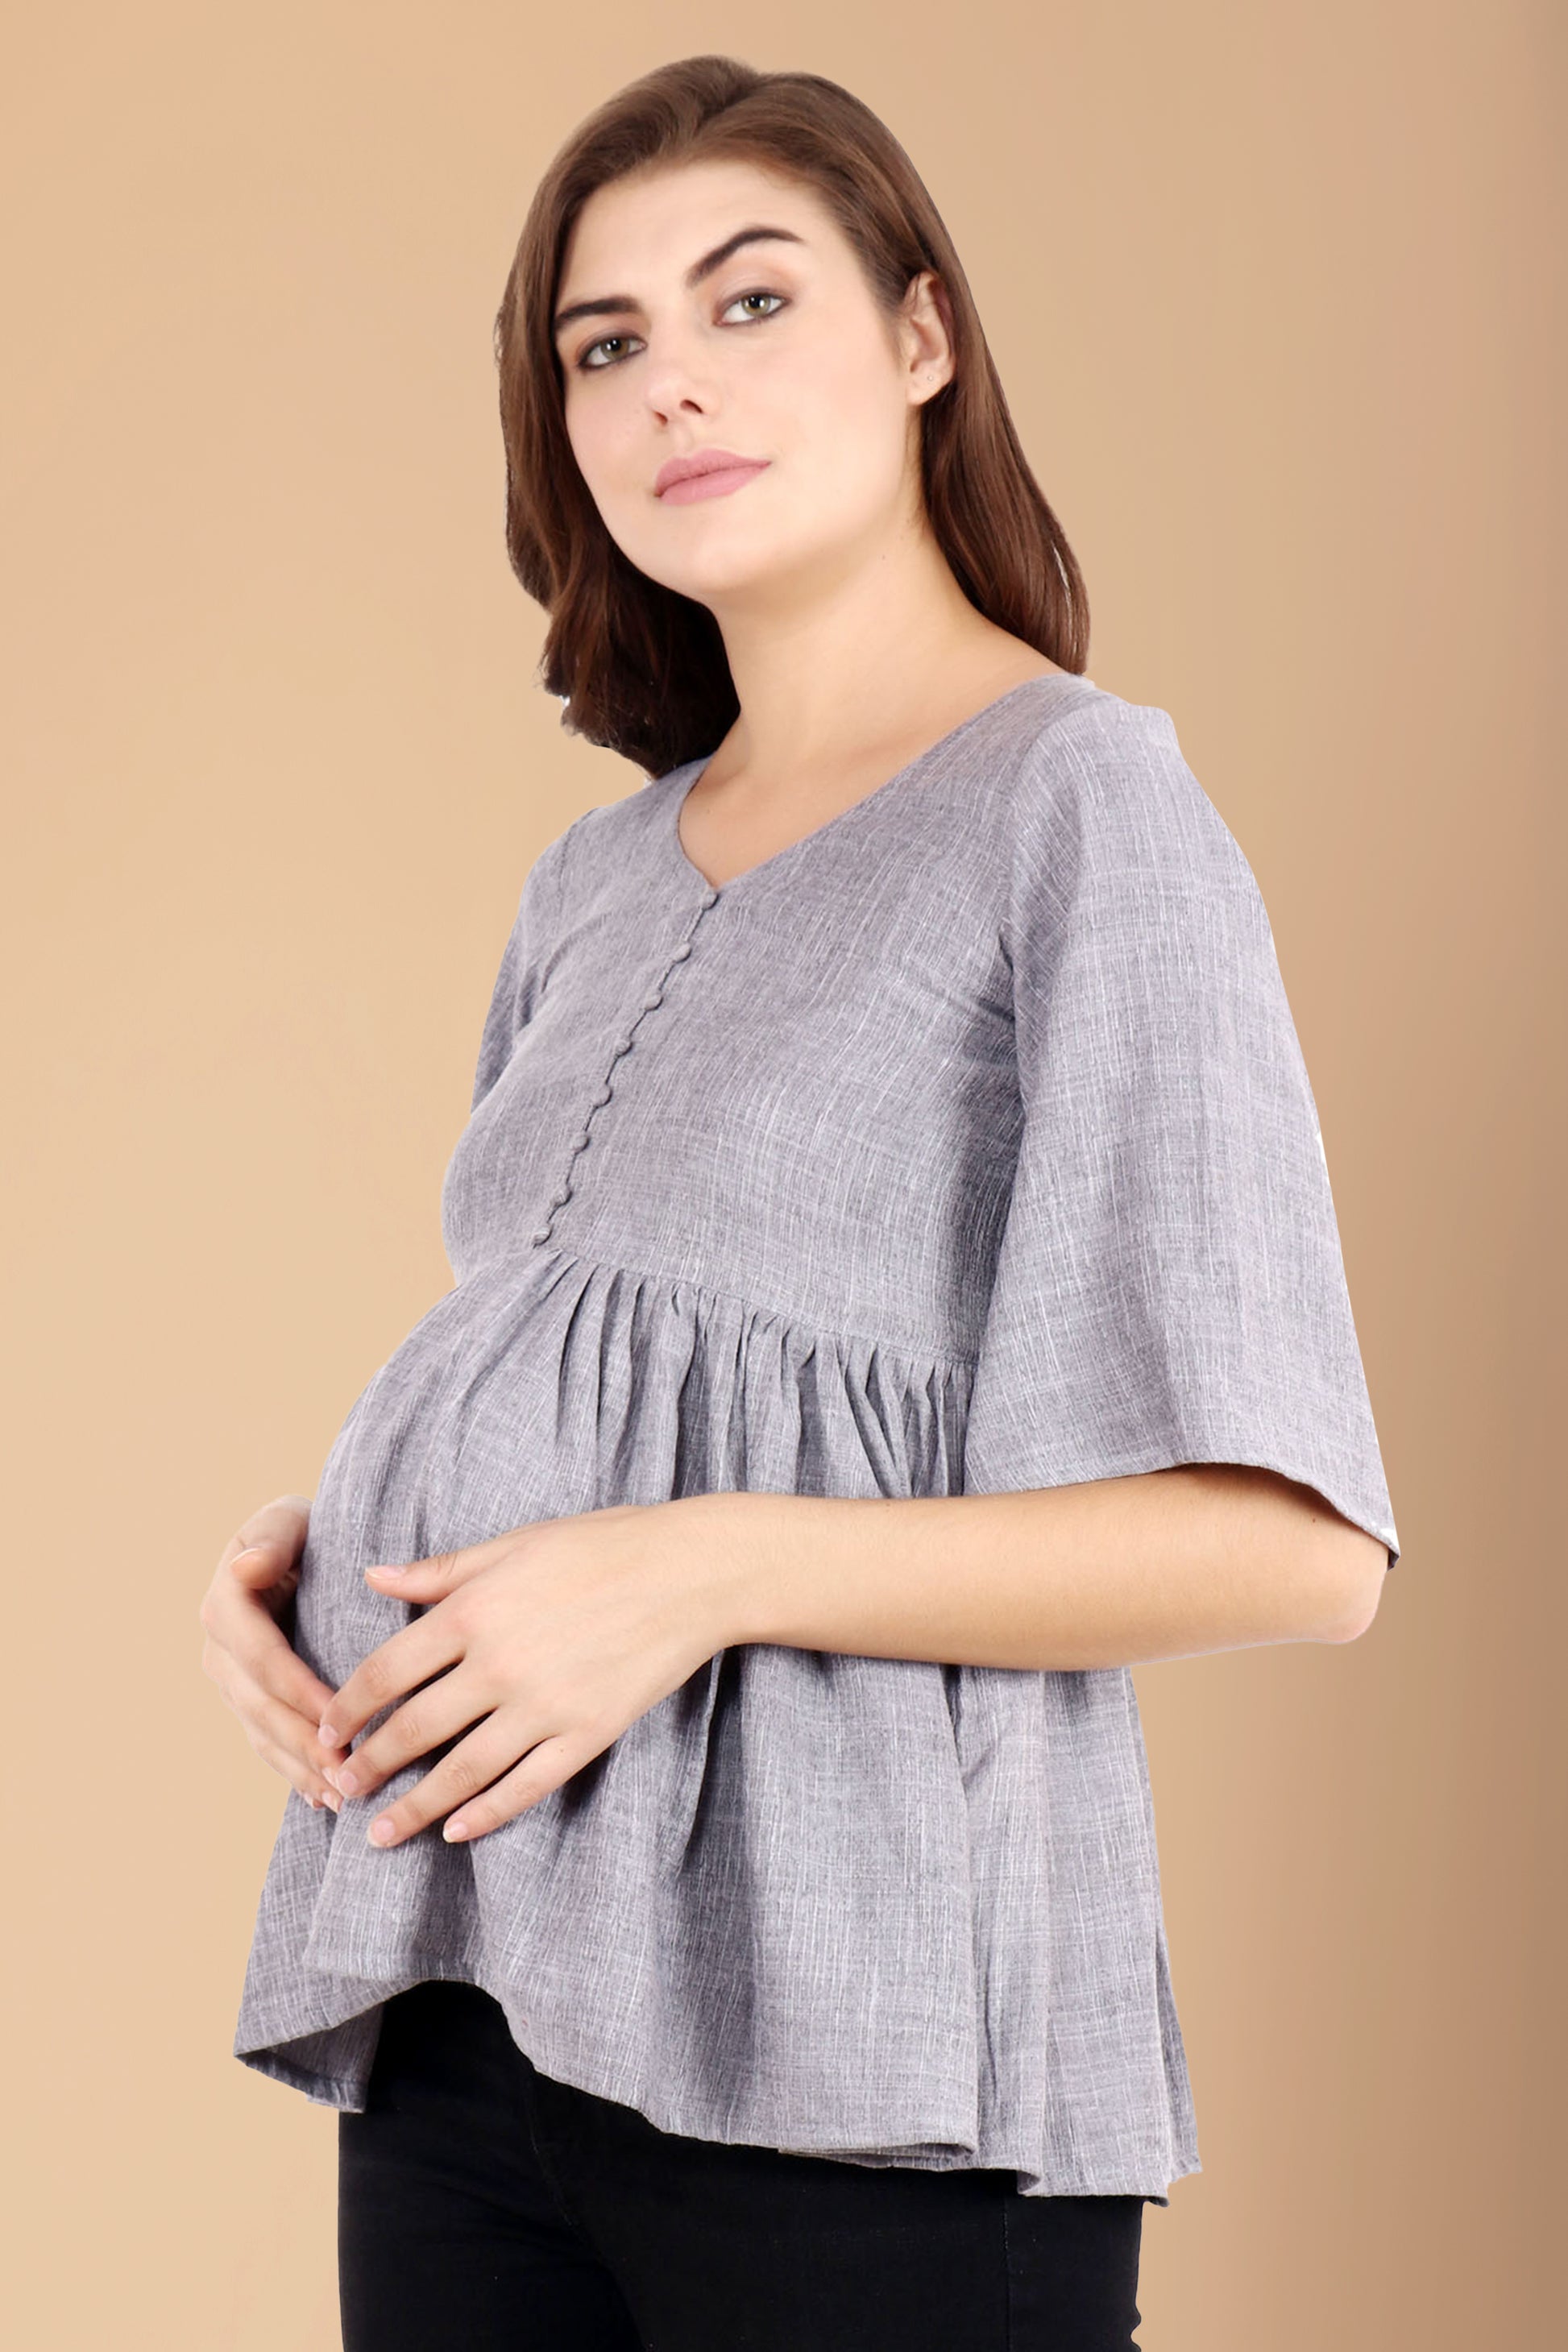 Buy Pregnancy Tops & Maternity Feeding Tops - Apella